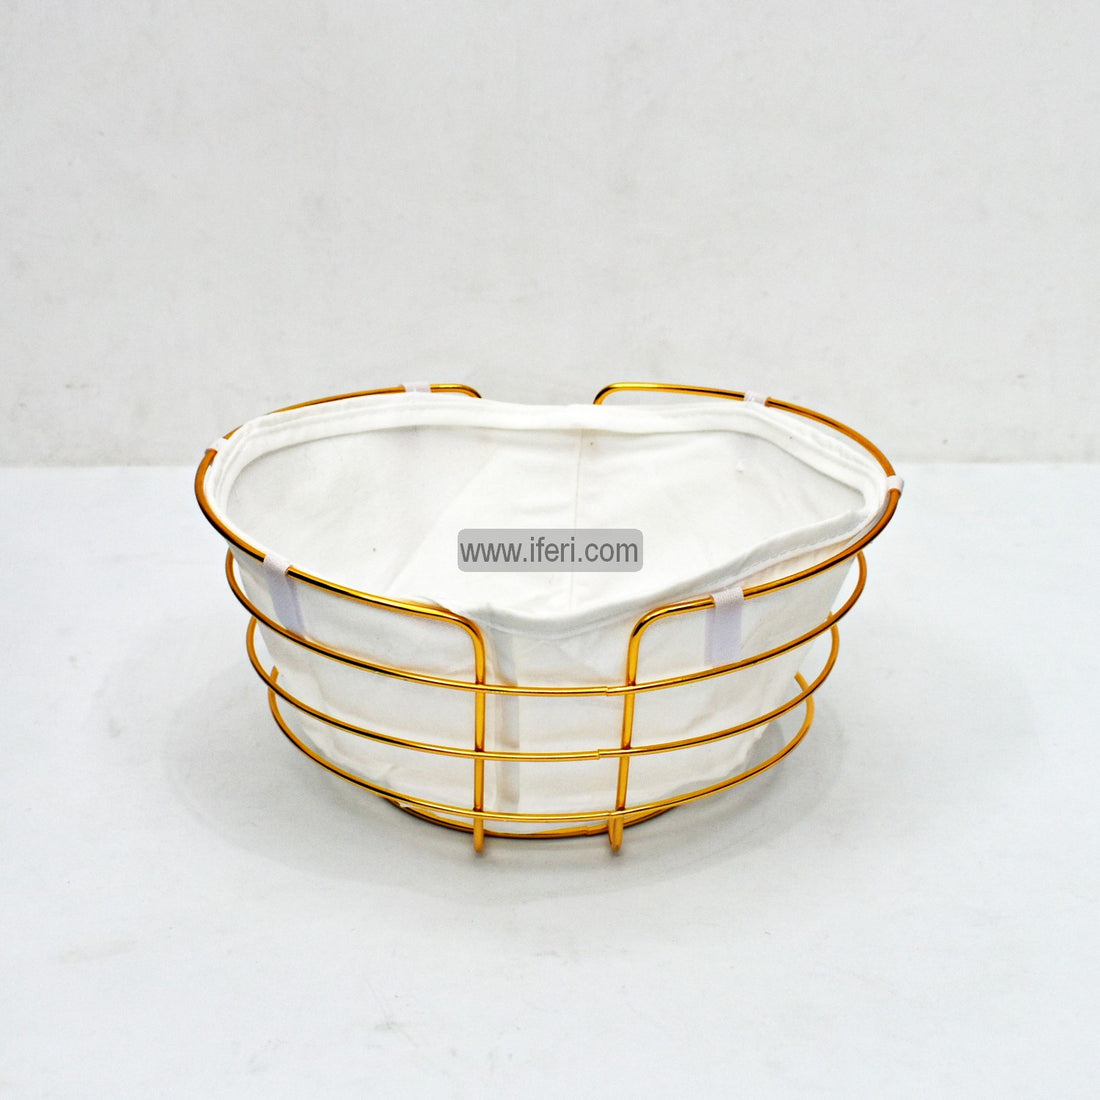 Buy Metal Fruit Basket Online from iferi.com in Bangladesh